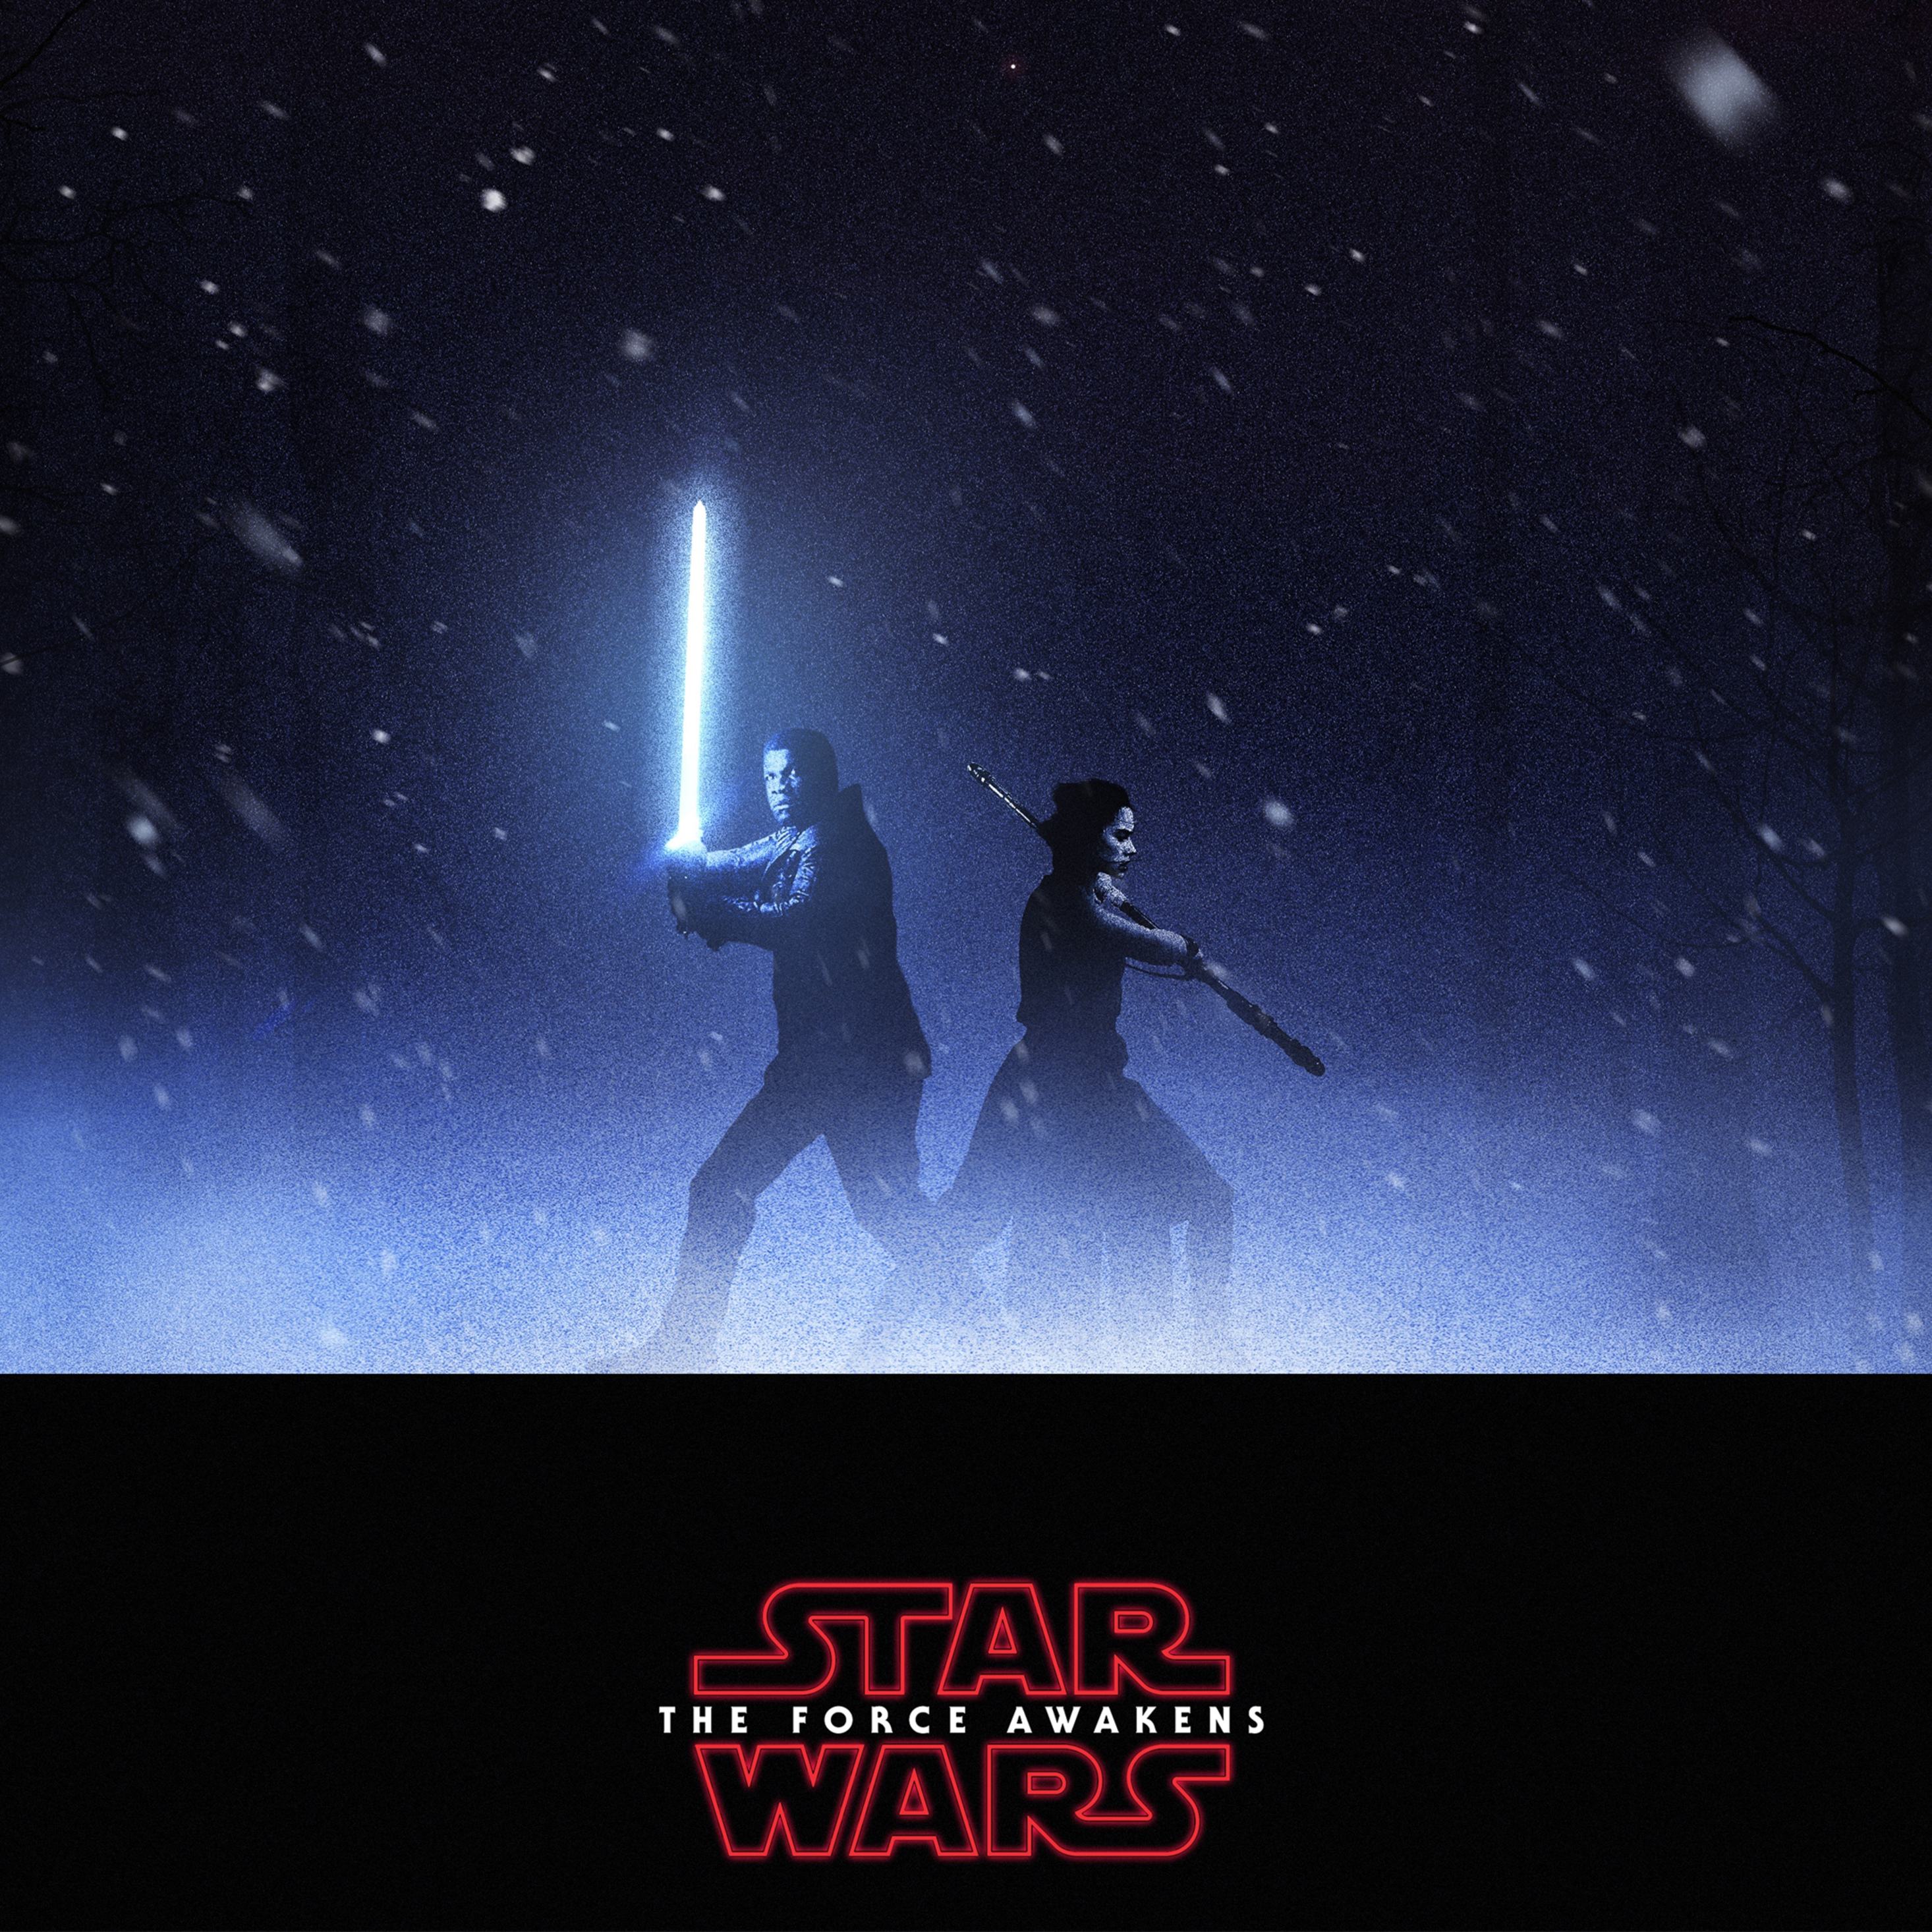 Finn Rey Star Wars iPad Pro Retina Display HD 4k Wallpaper, Image, Background, Photo and Picture